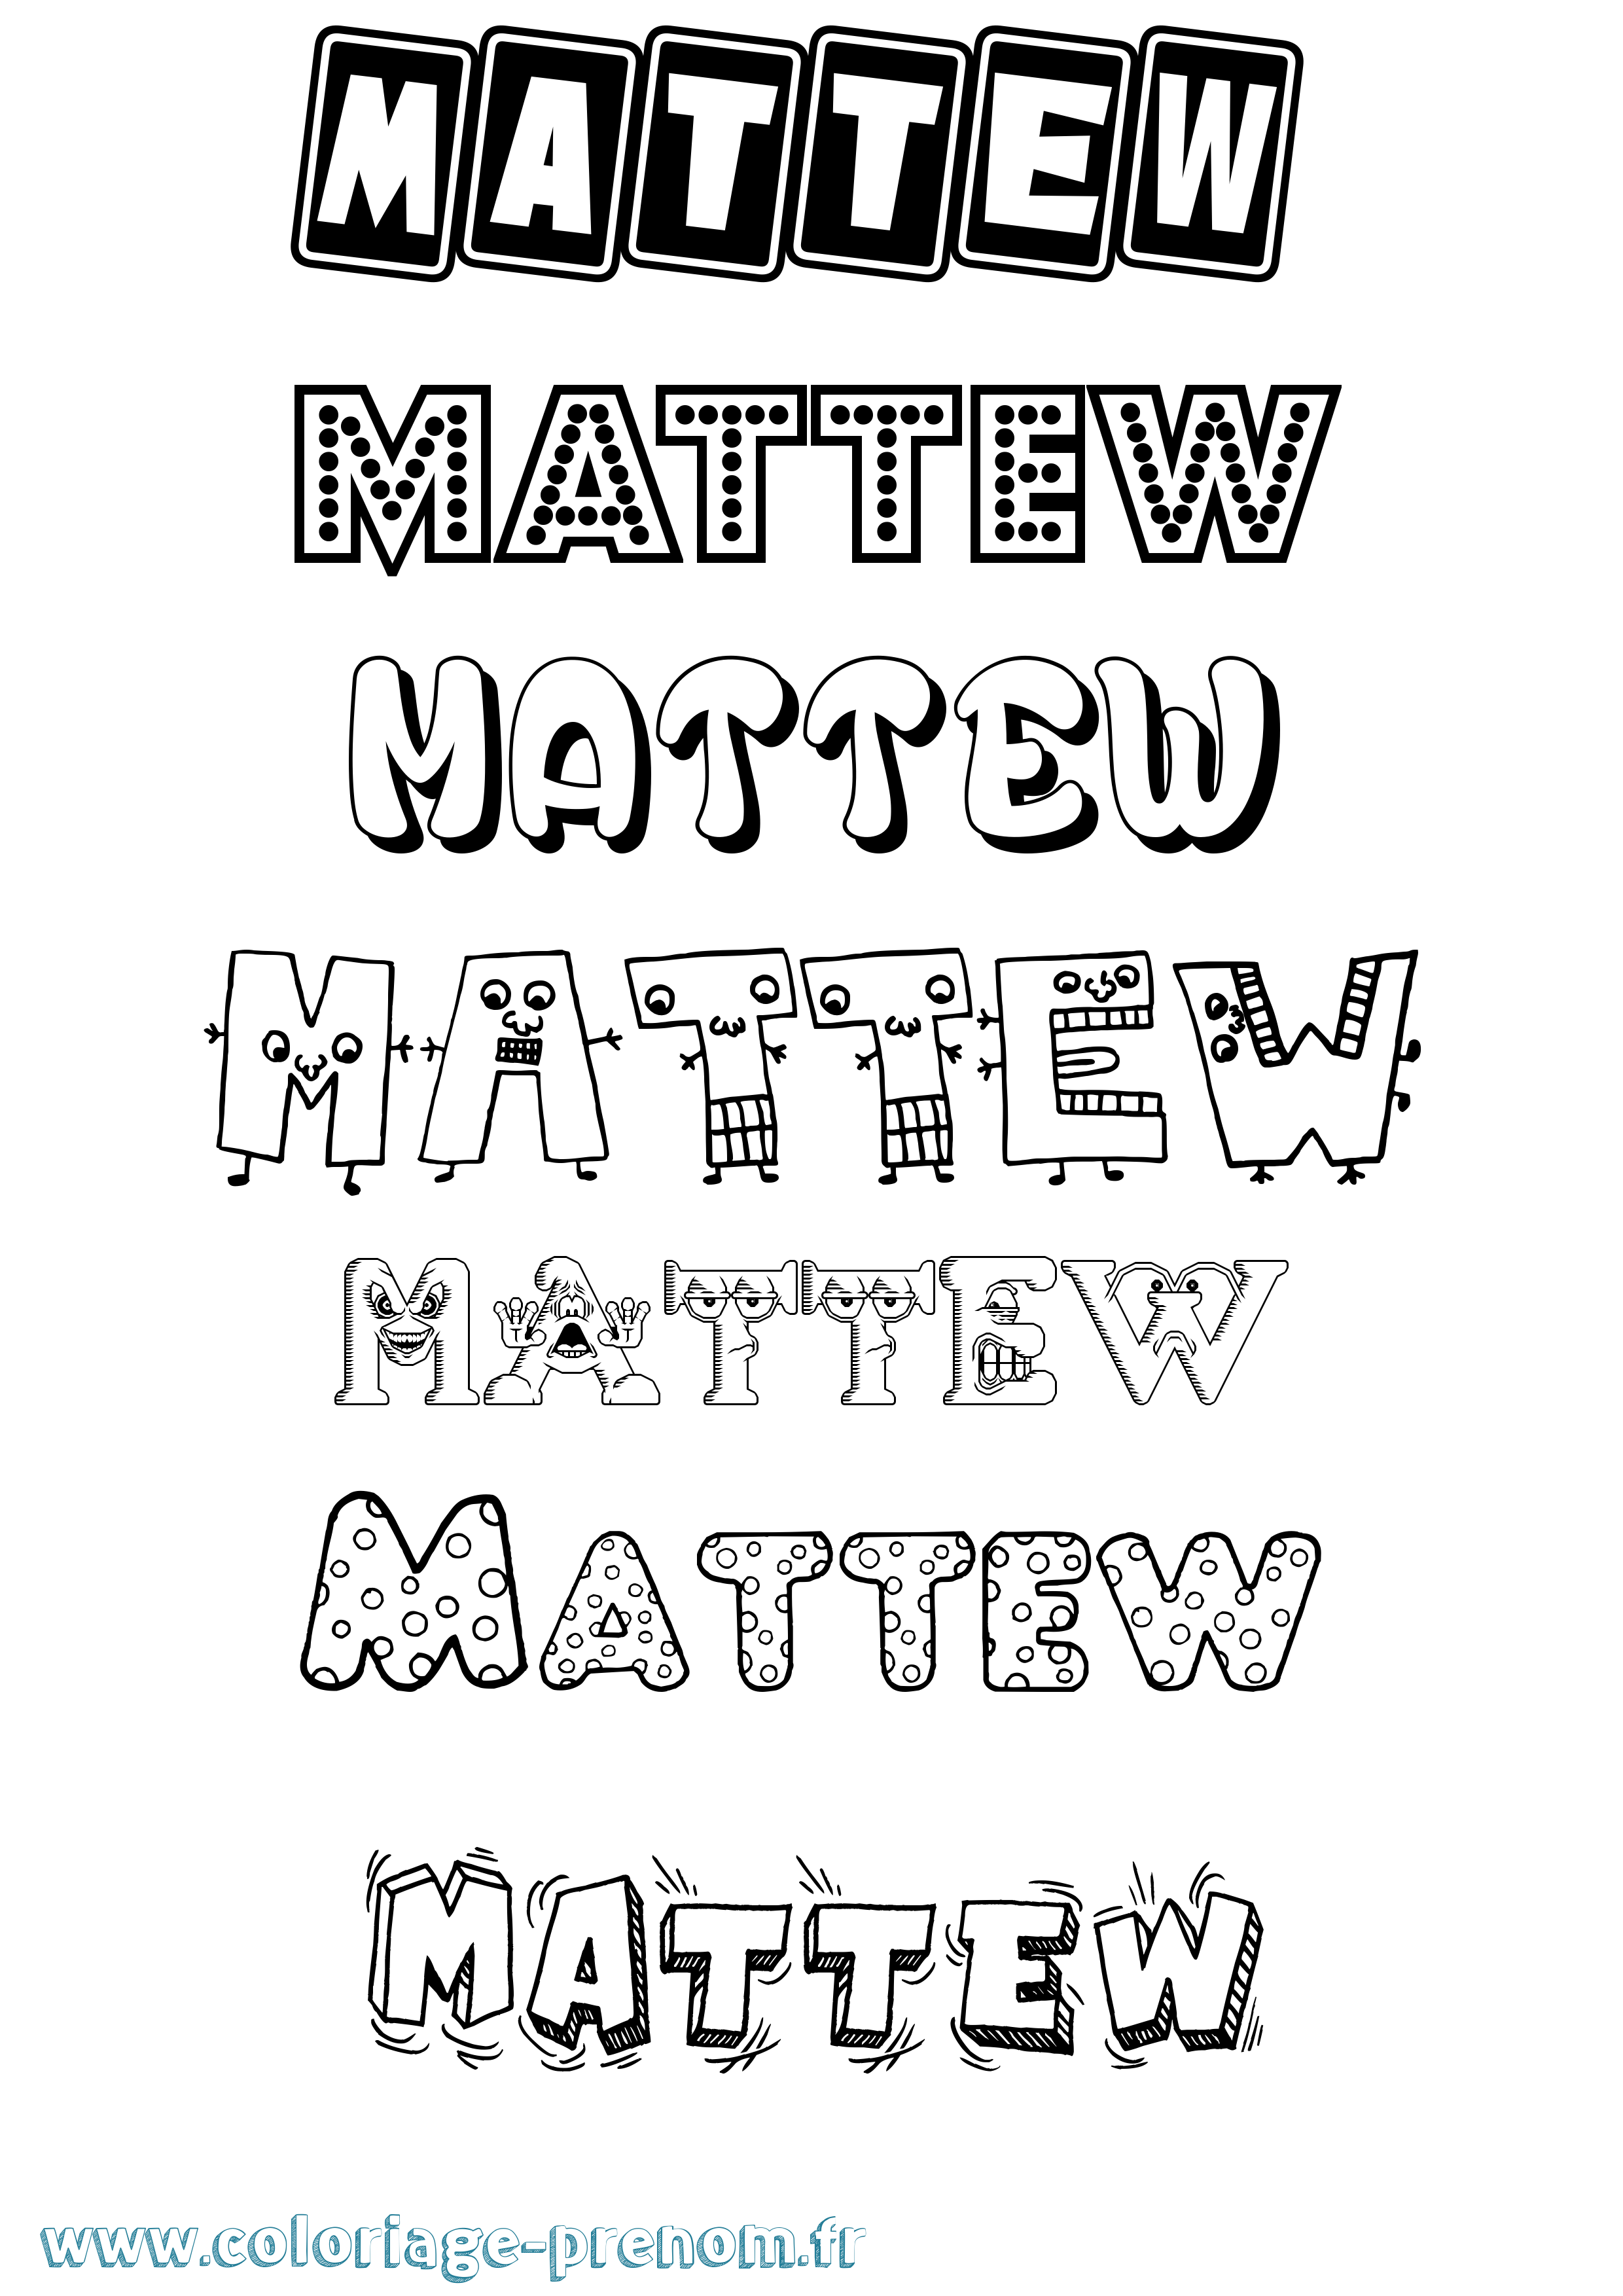 Coloriage prénom Mattew Fun